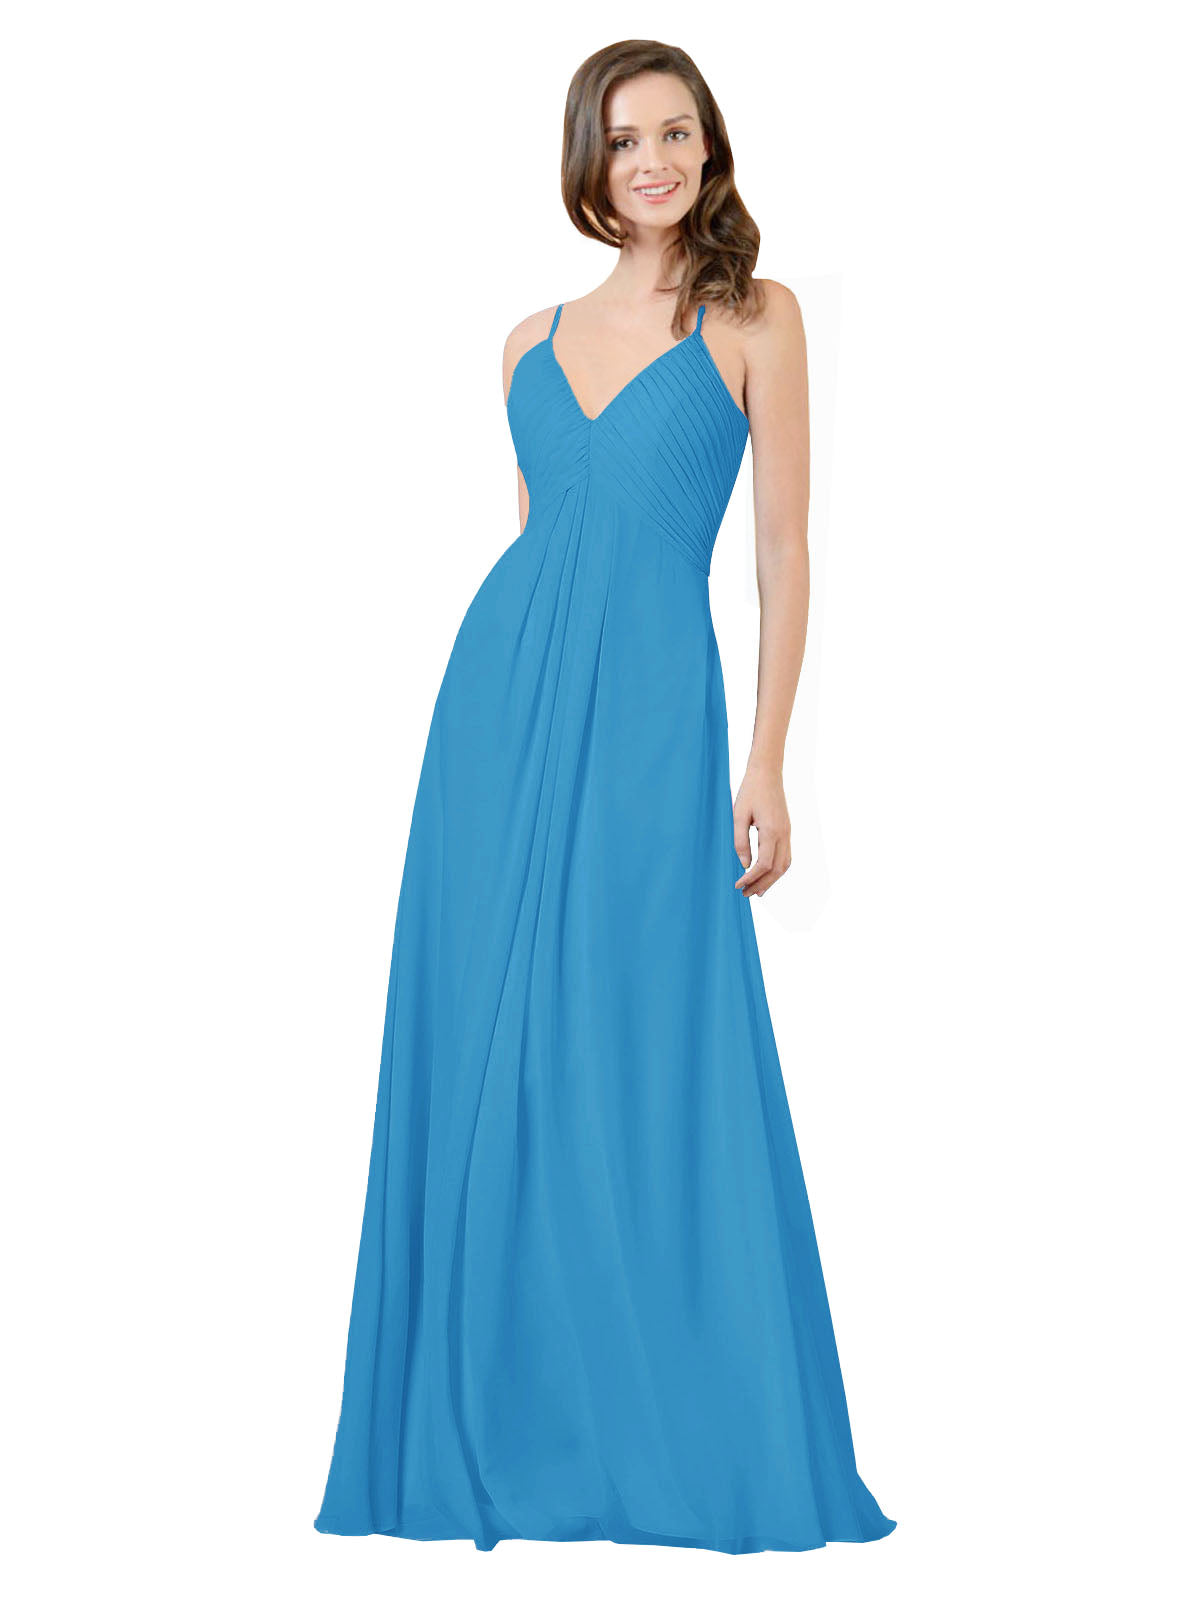 Peacock Blue A-Line V-Neck Spaghetti Straps Sleeveless Long Bridesmaid Dress Kari